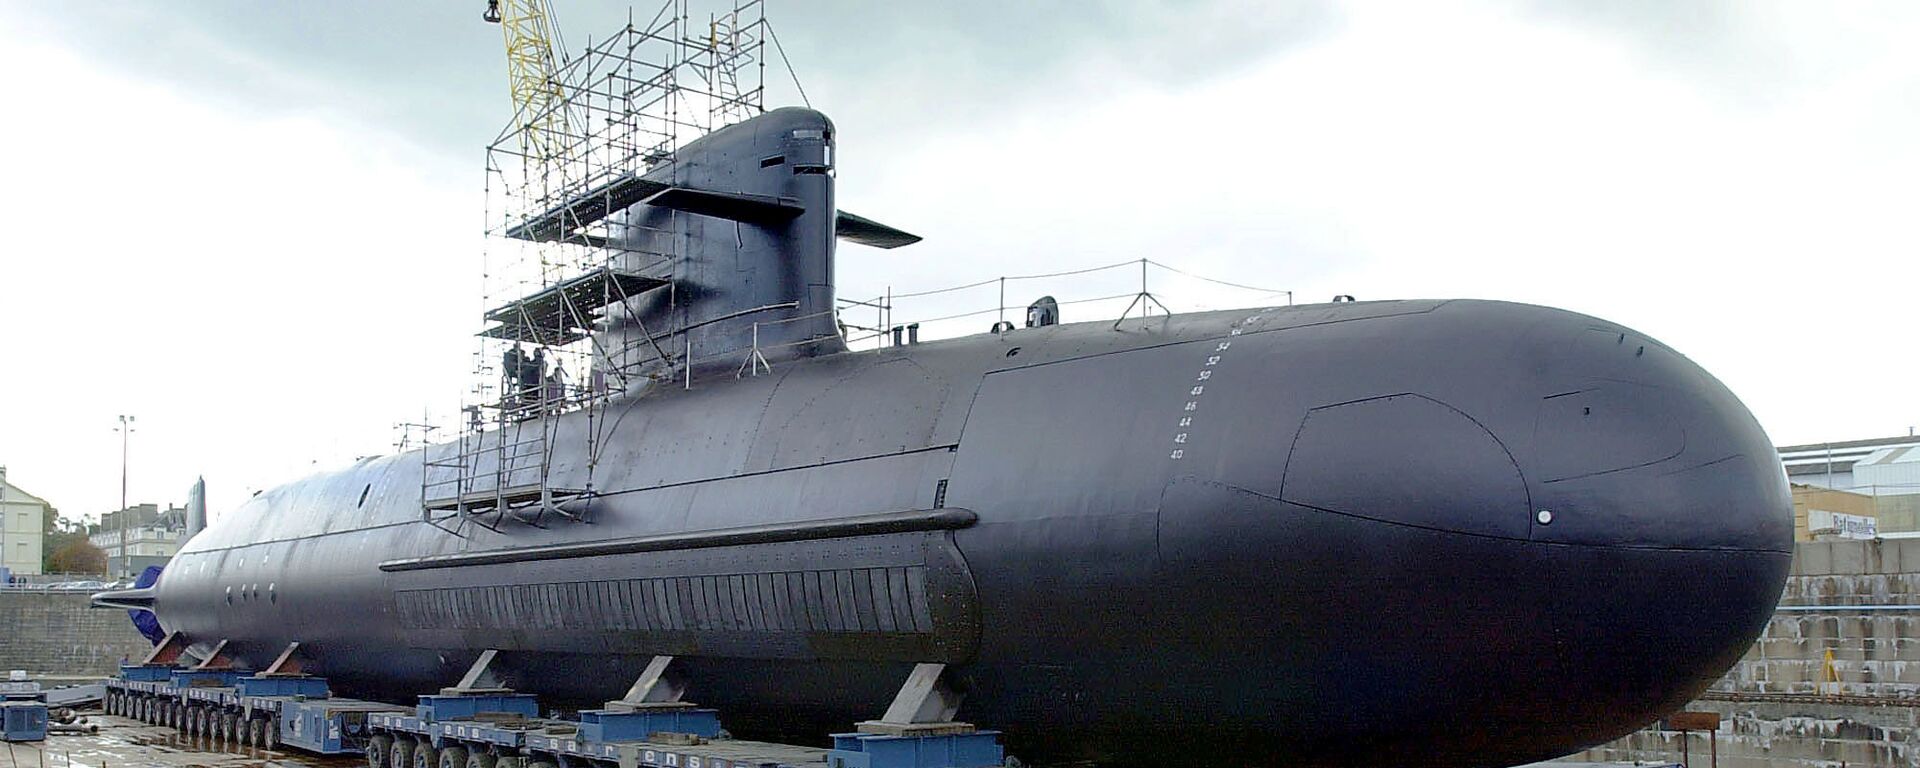 Un submarino francés (imagen referencial) - Sputnik Mundo, 1920, 17.09.2021